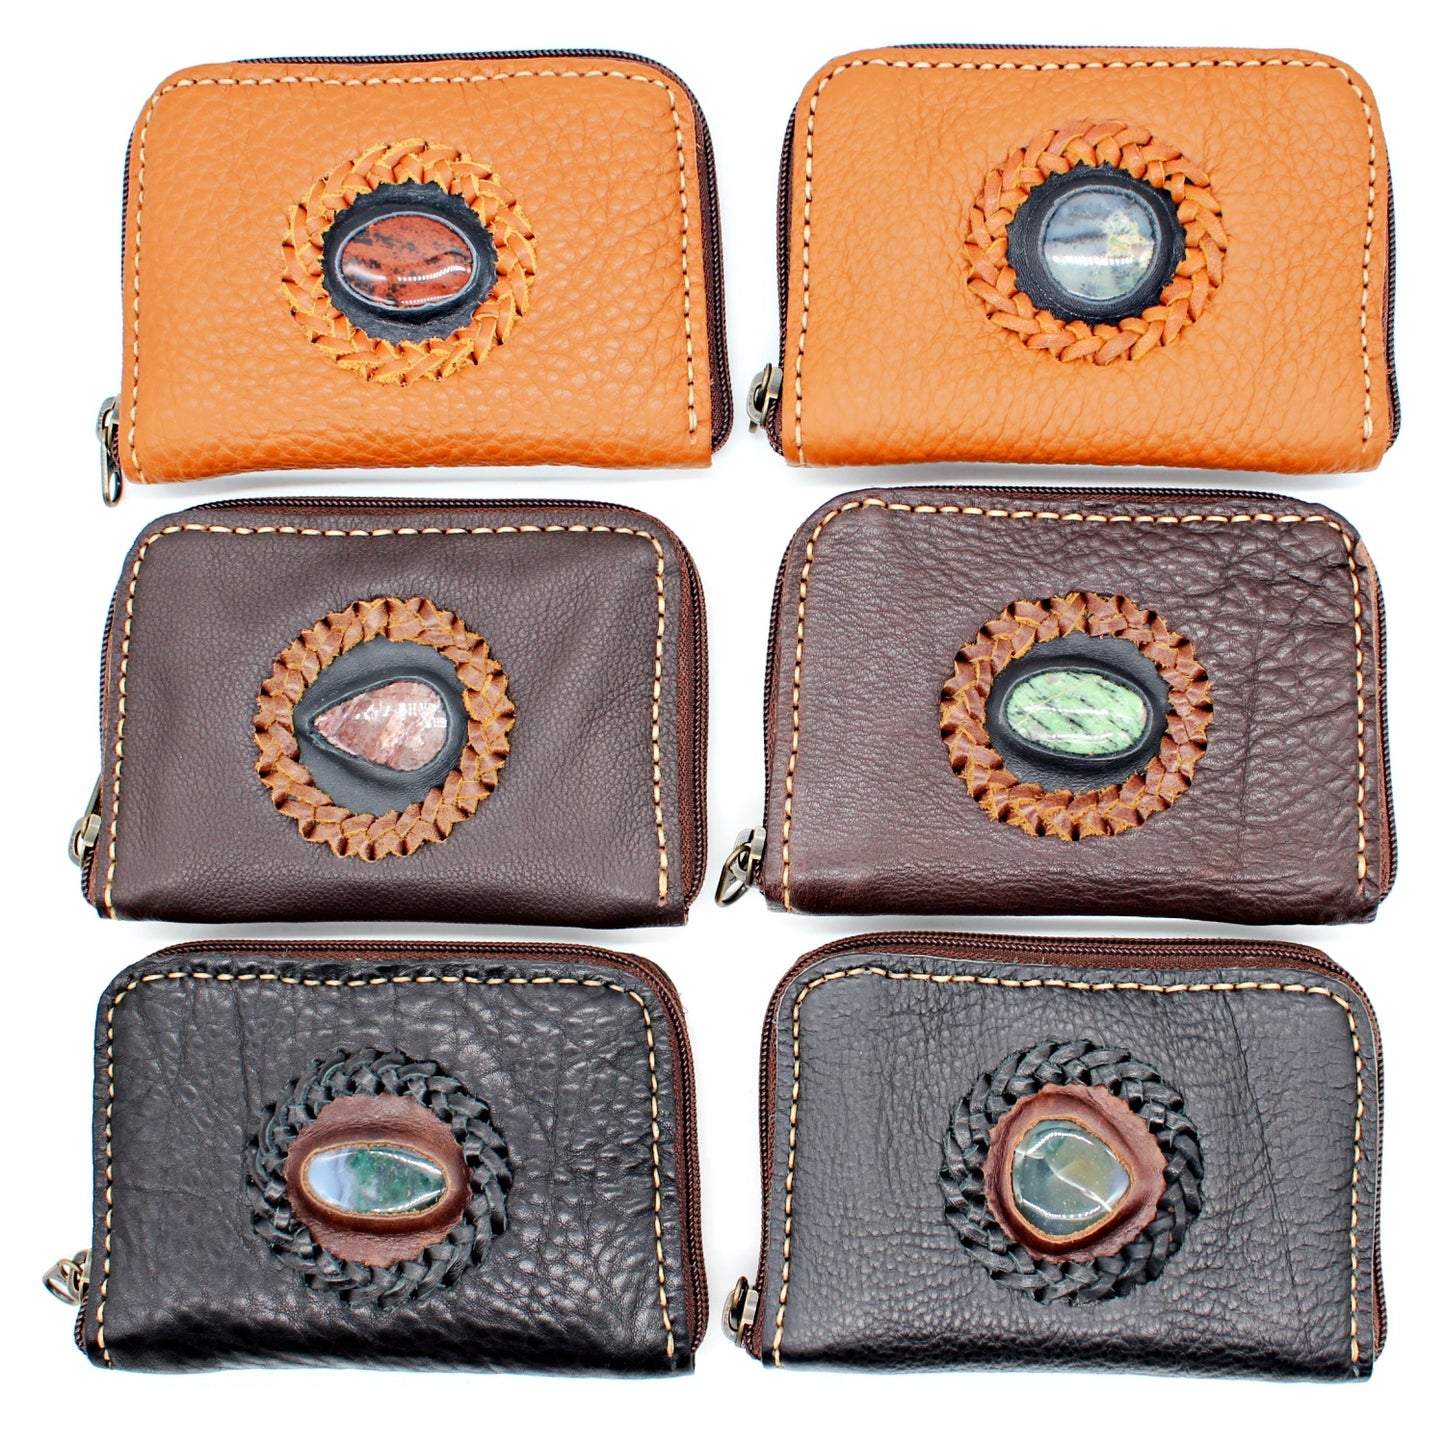 Handmade genuine pebble grain leather zipper wallet with precious stone accent